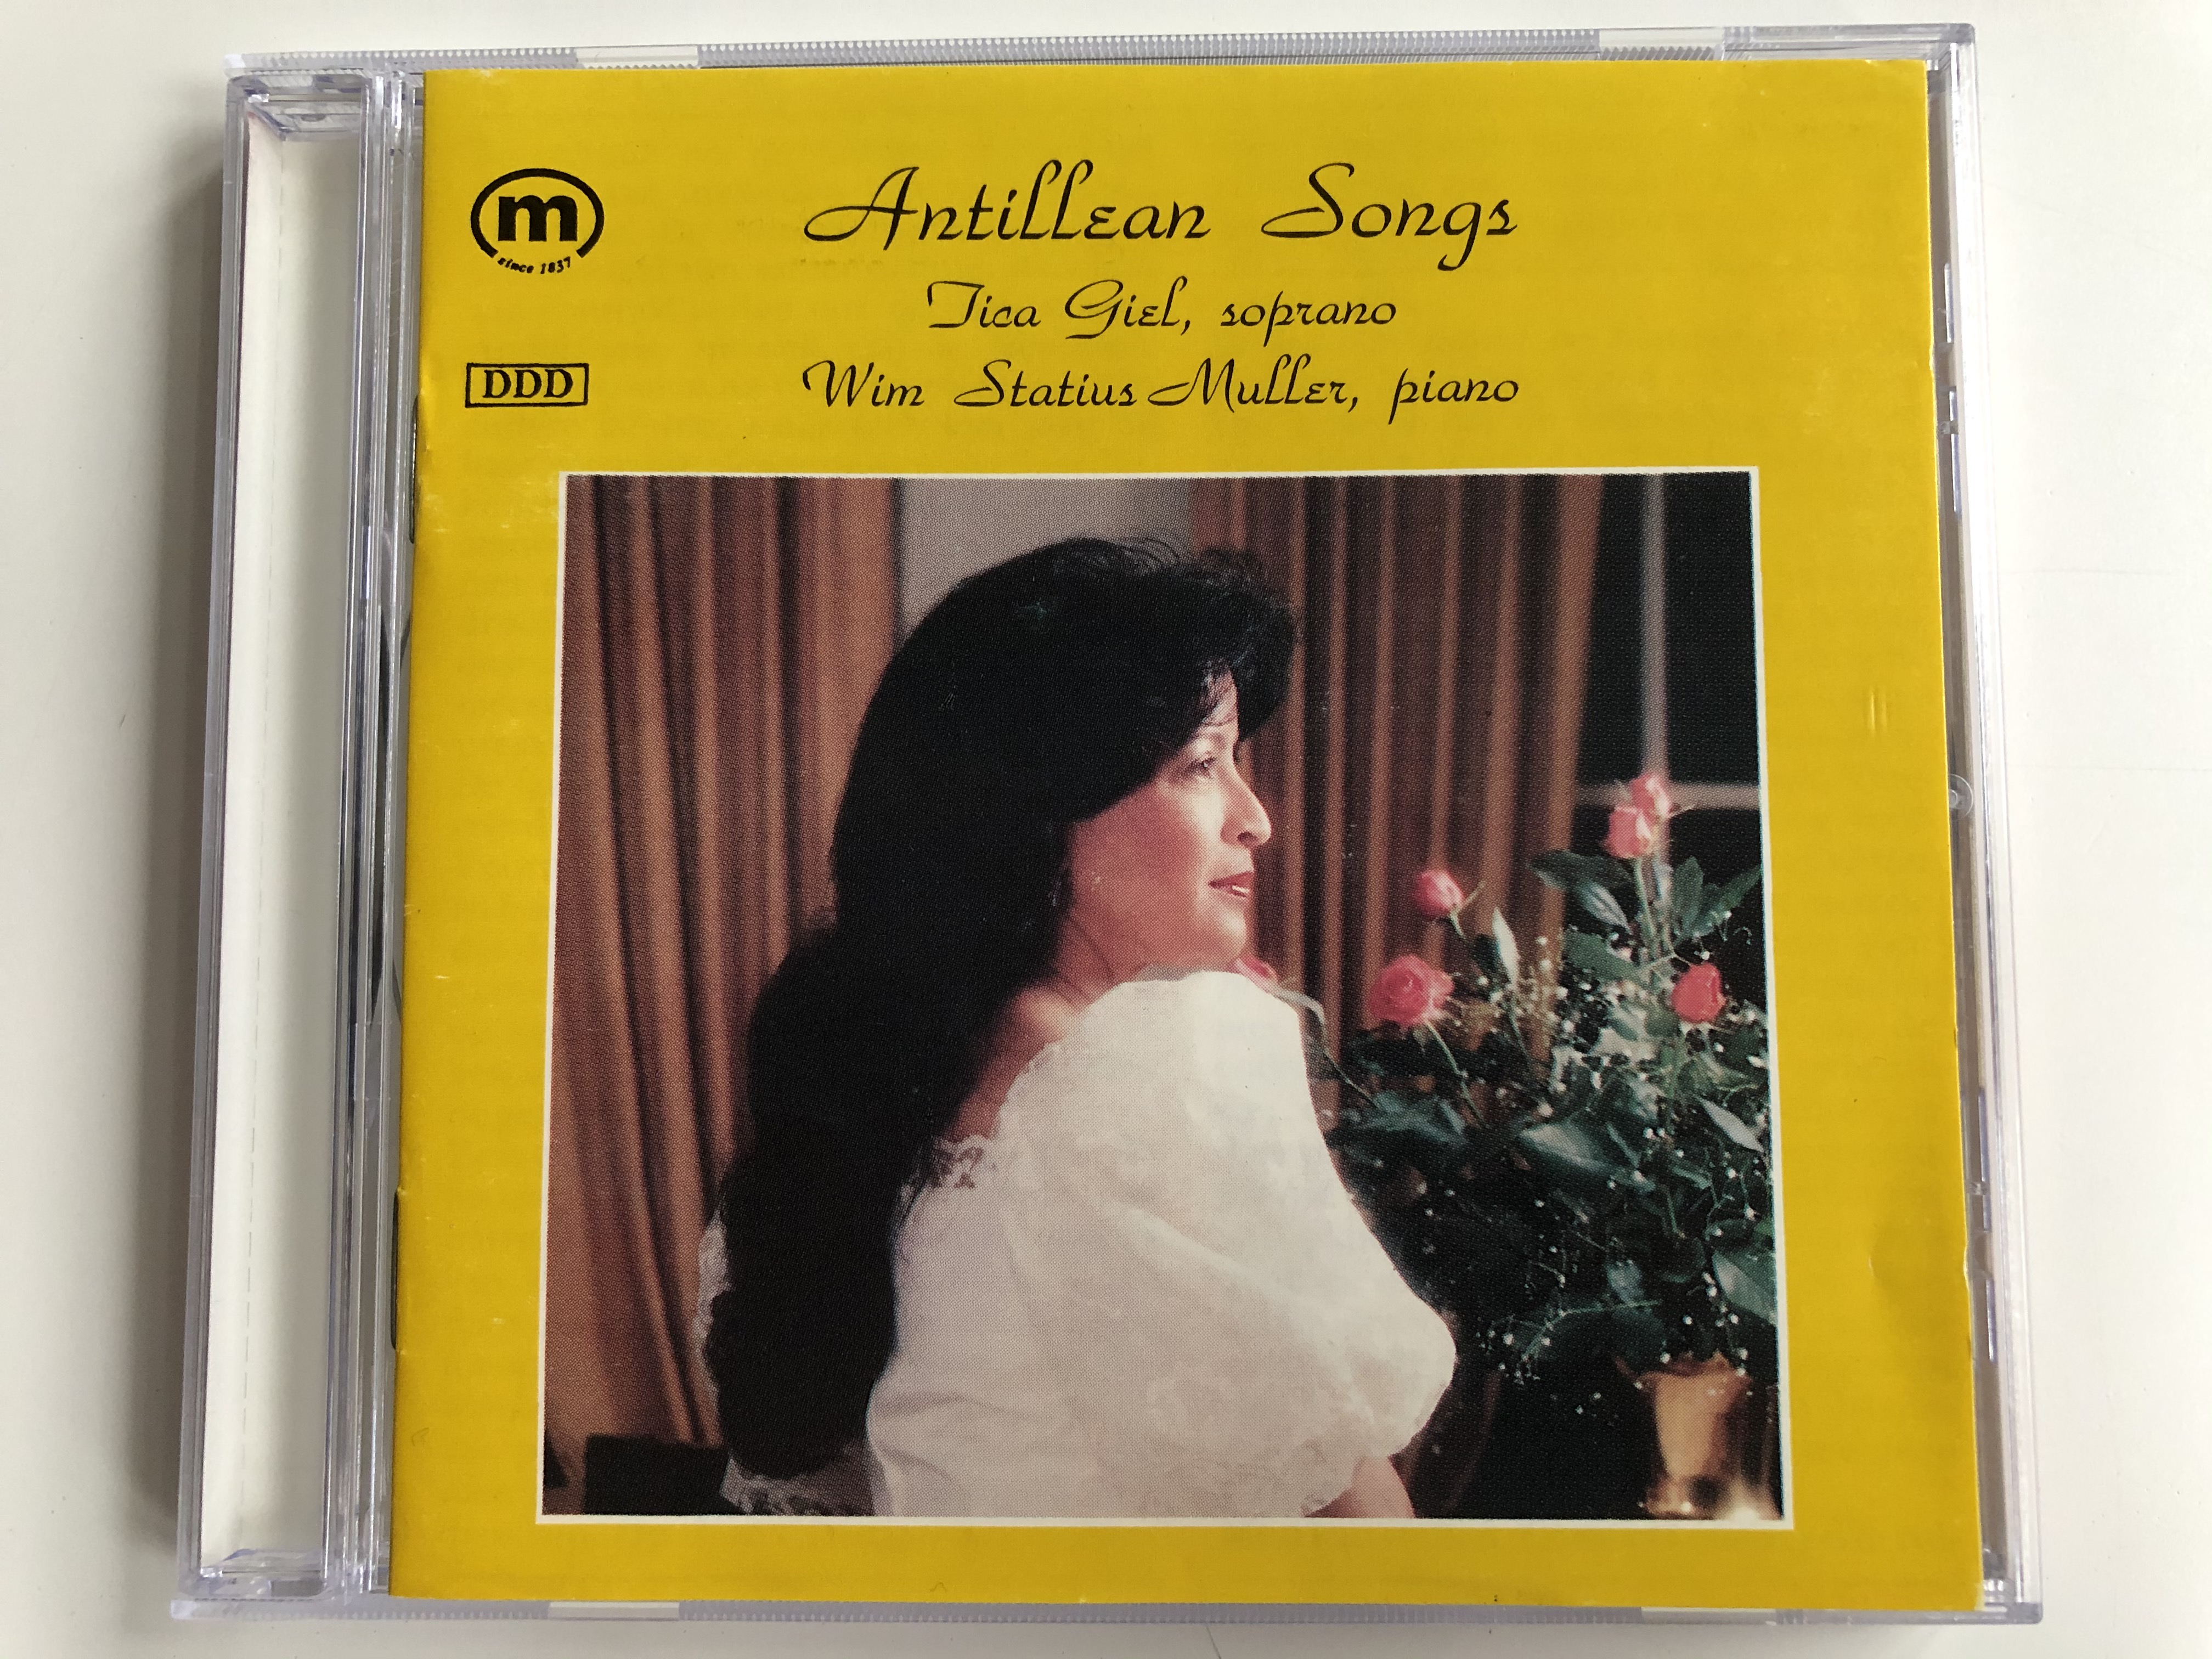 antillean-songs-tica-giel-soprano-wim-statius-muller-piano-m-audio-cd-1990-cd-90-004-1-.jpg